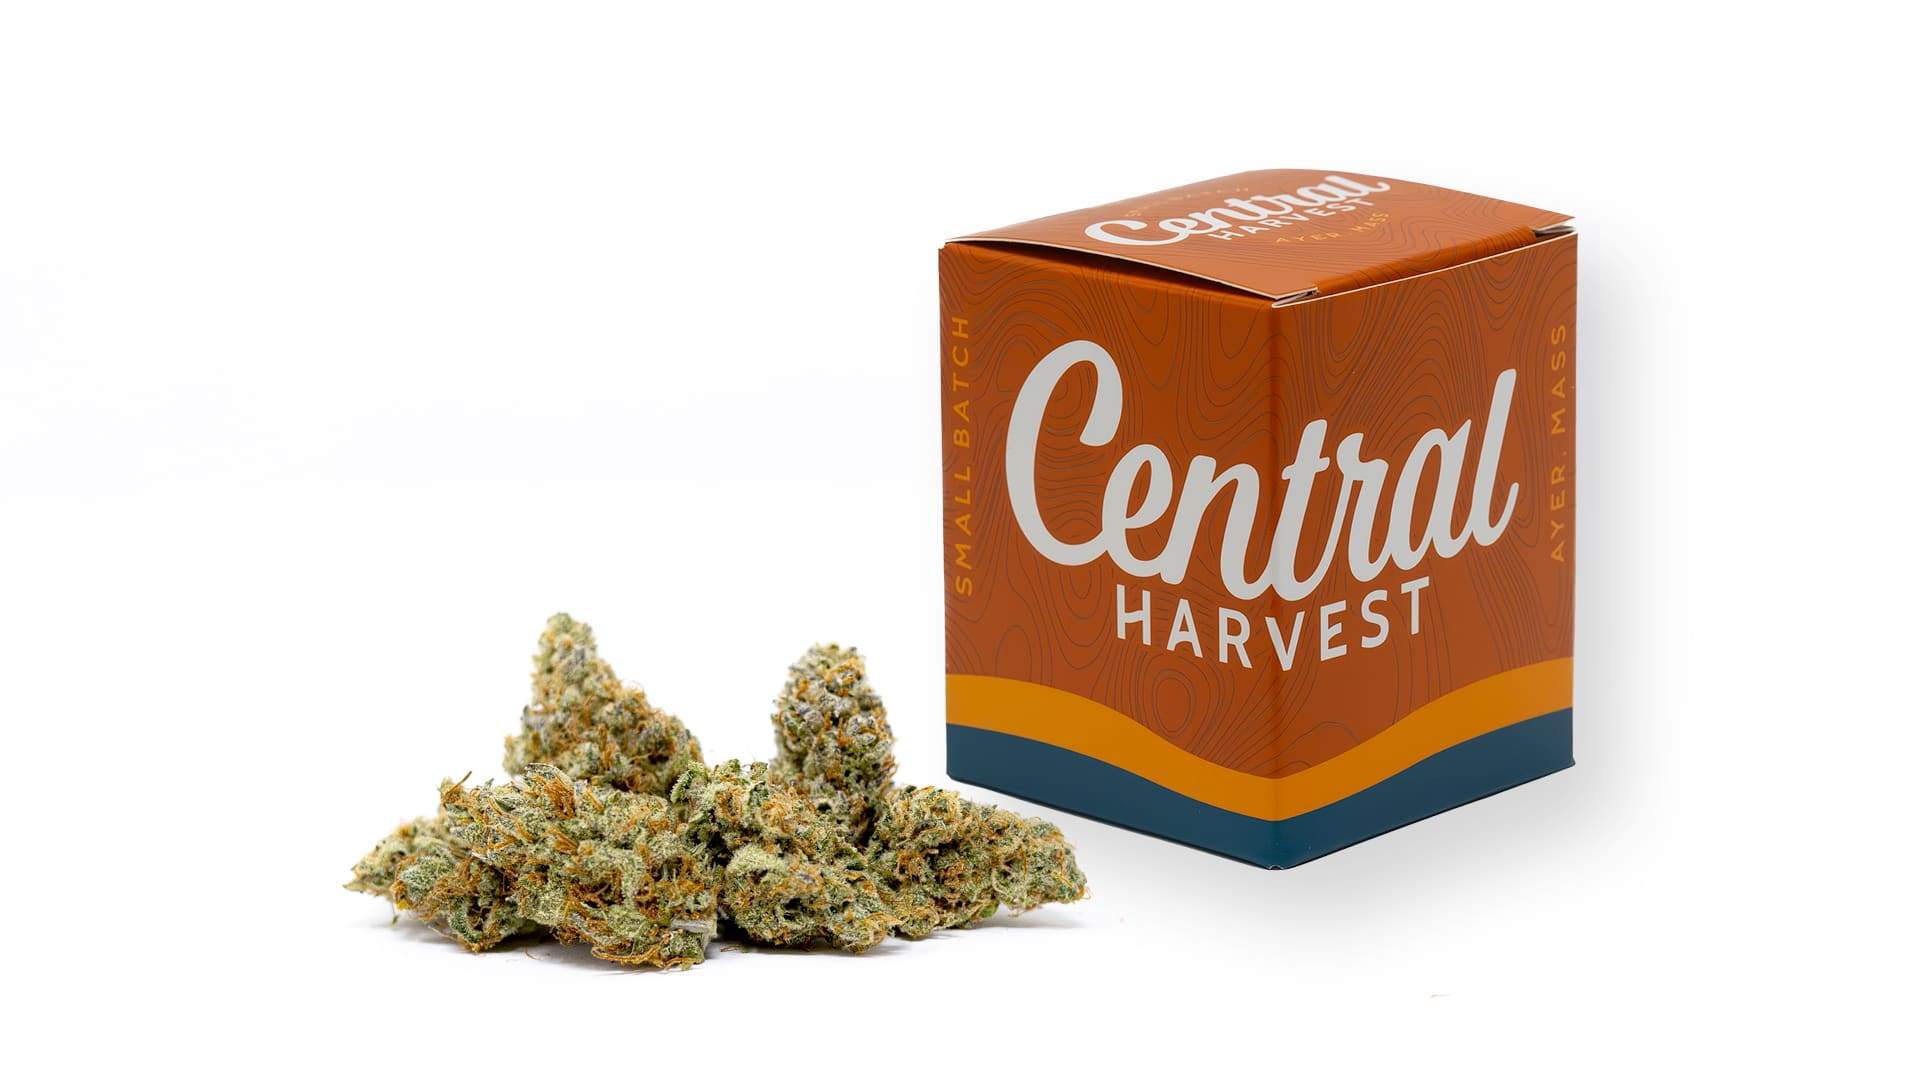 Mandarin Sunset is an Indica Cannabis Strain grown at Central Harvest